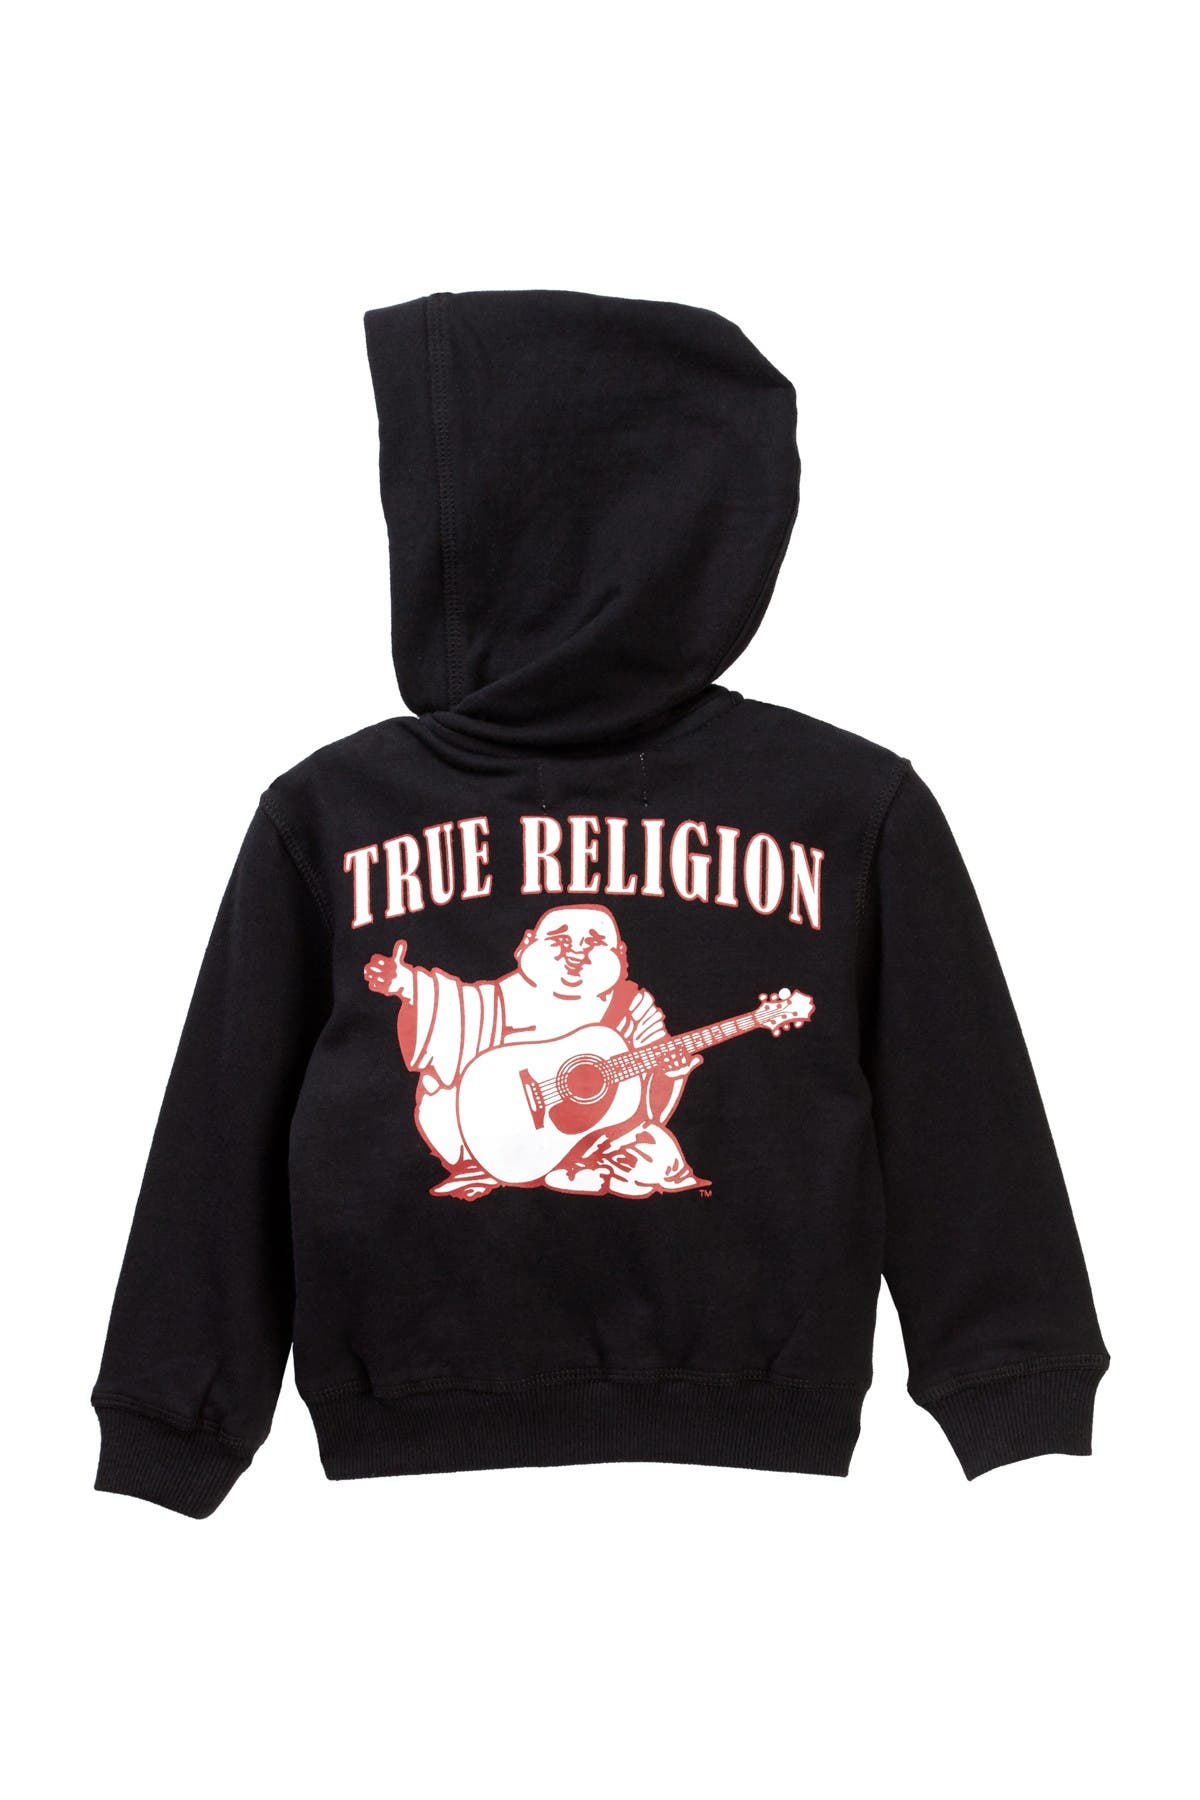 true religion sale sweatsuit